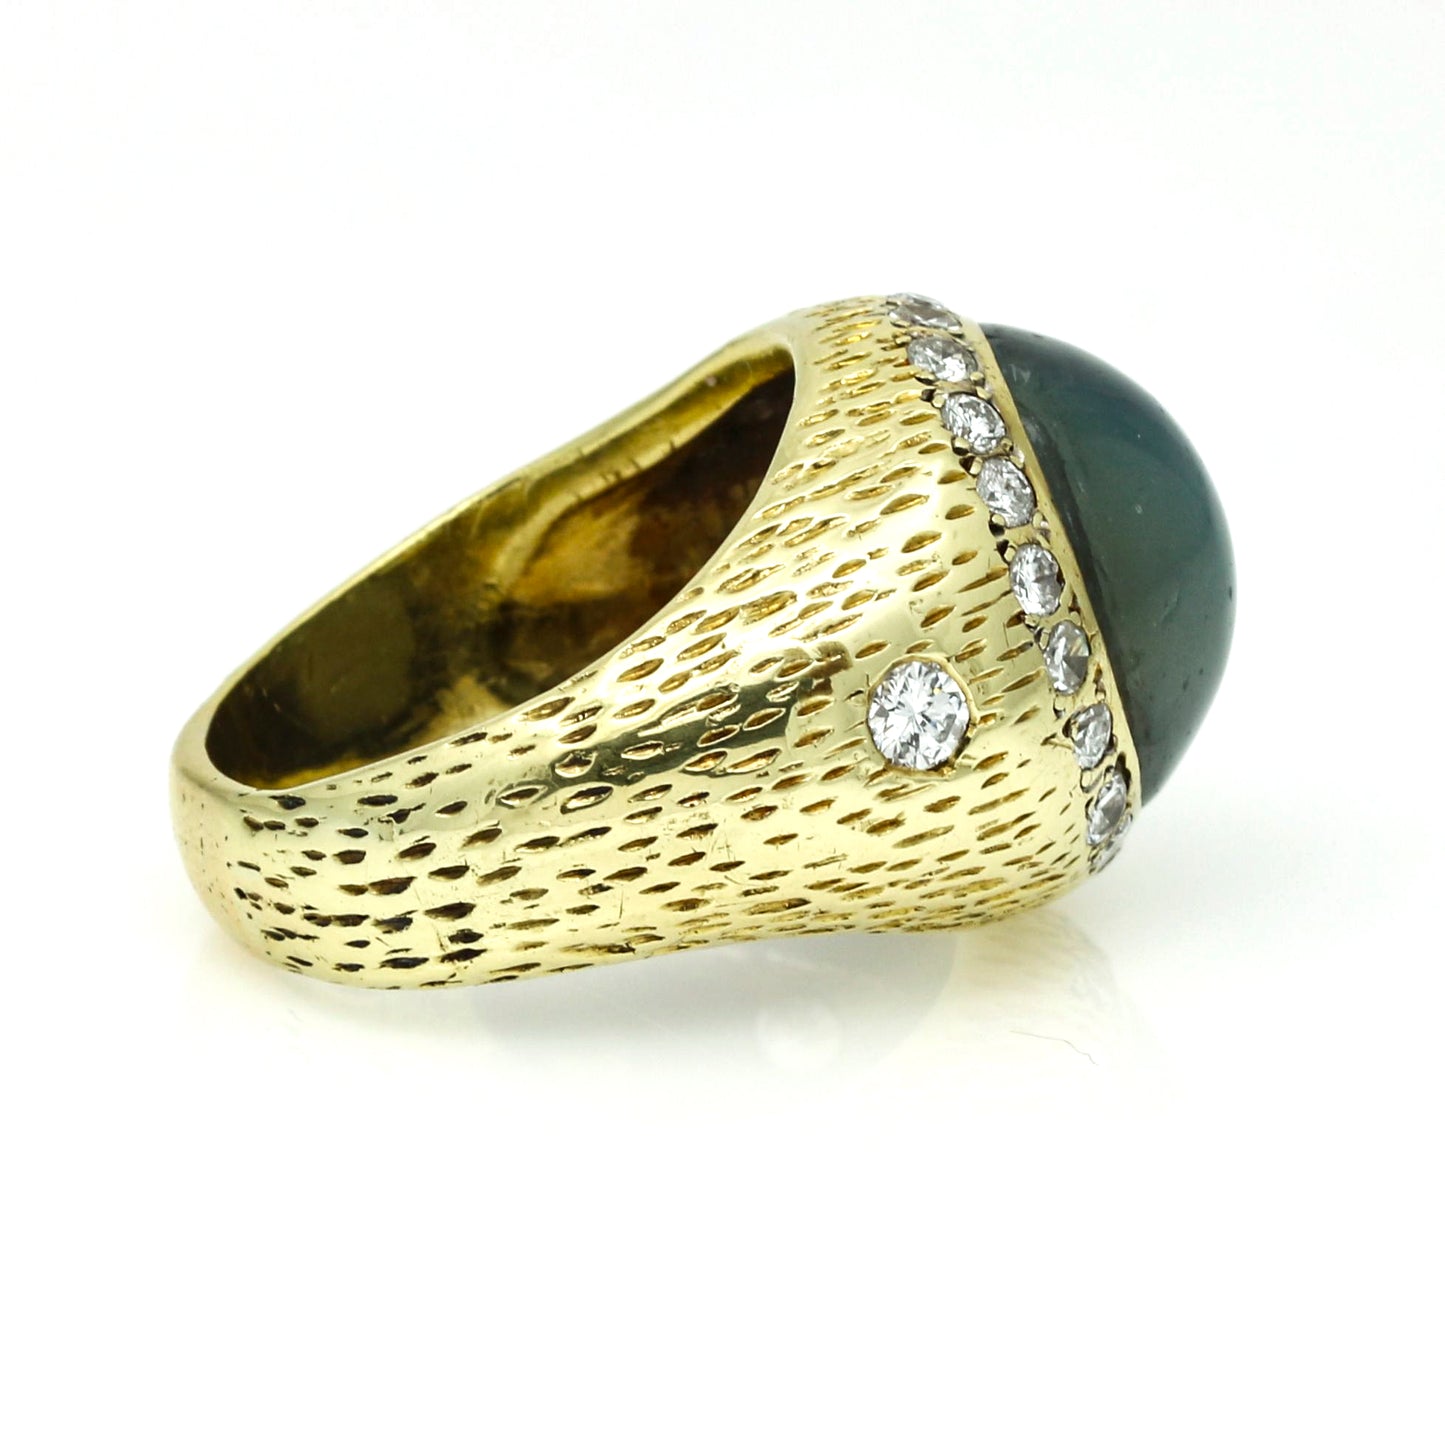 Star Sapphire Diamond Statement Ring in 18k Textured Yellow Gold